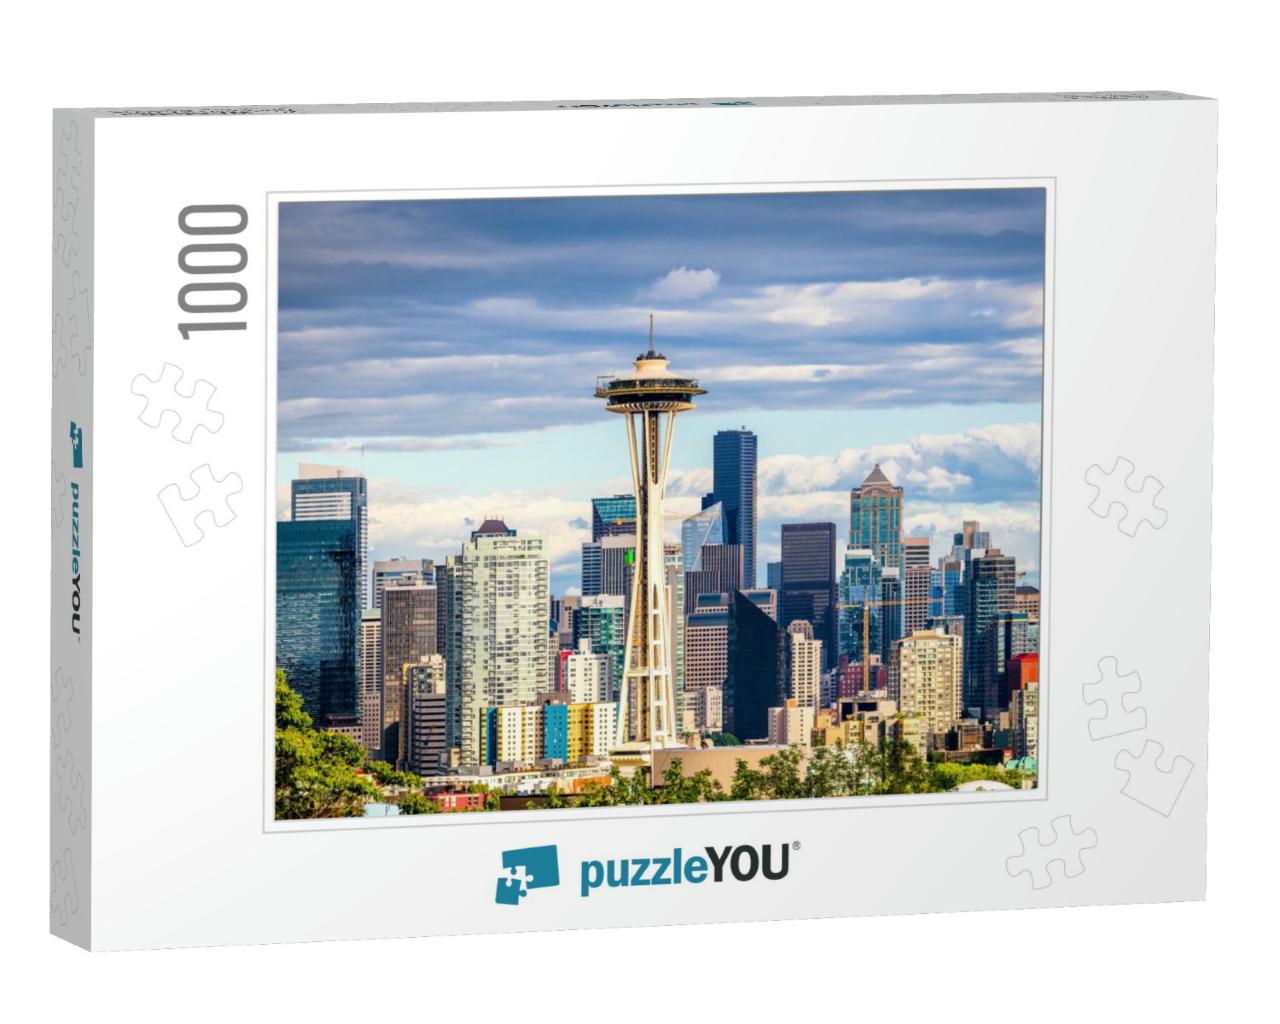 Seattle, Washington, USA Downtown Skyline... Jigsaw Puzzle with 1000 pieces